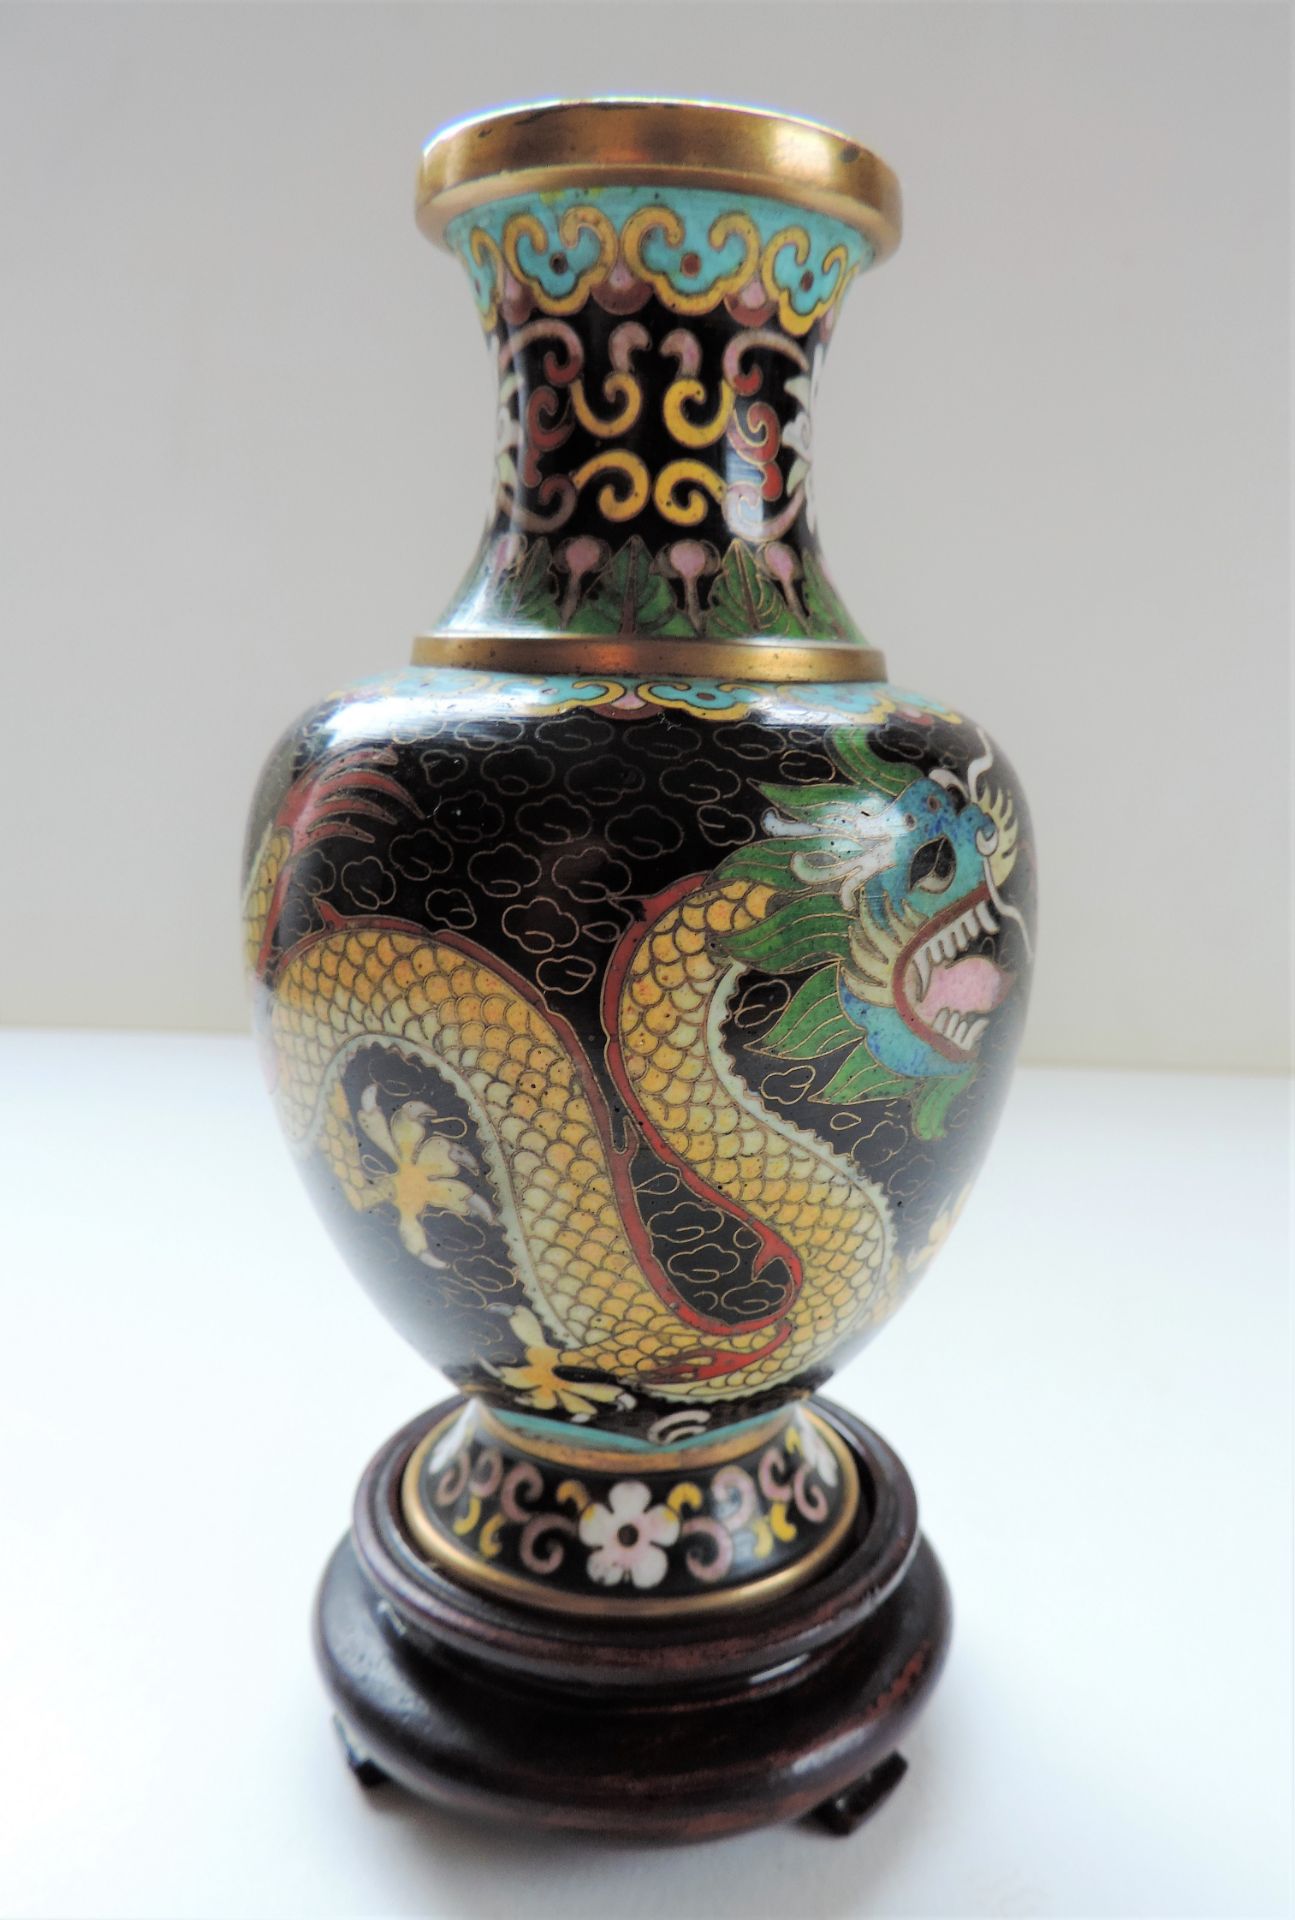 Vintage Cloisonne Imperial Dragon Vase 16cm tall - Image 2 of 7